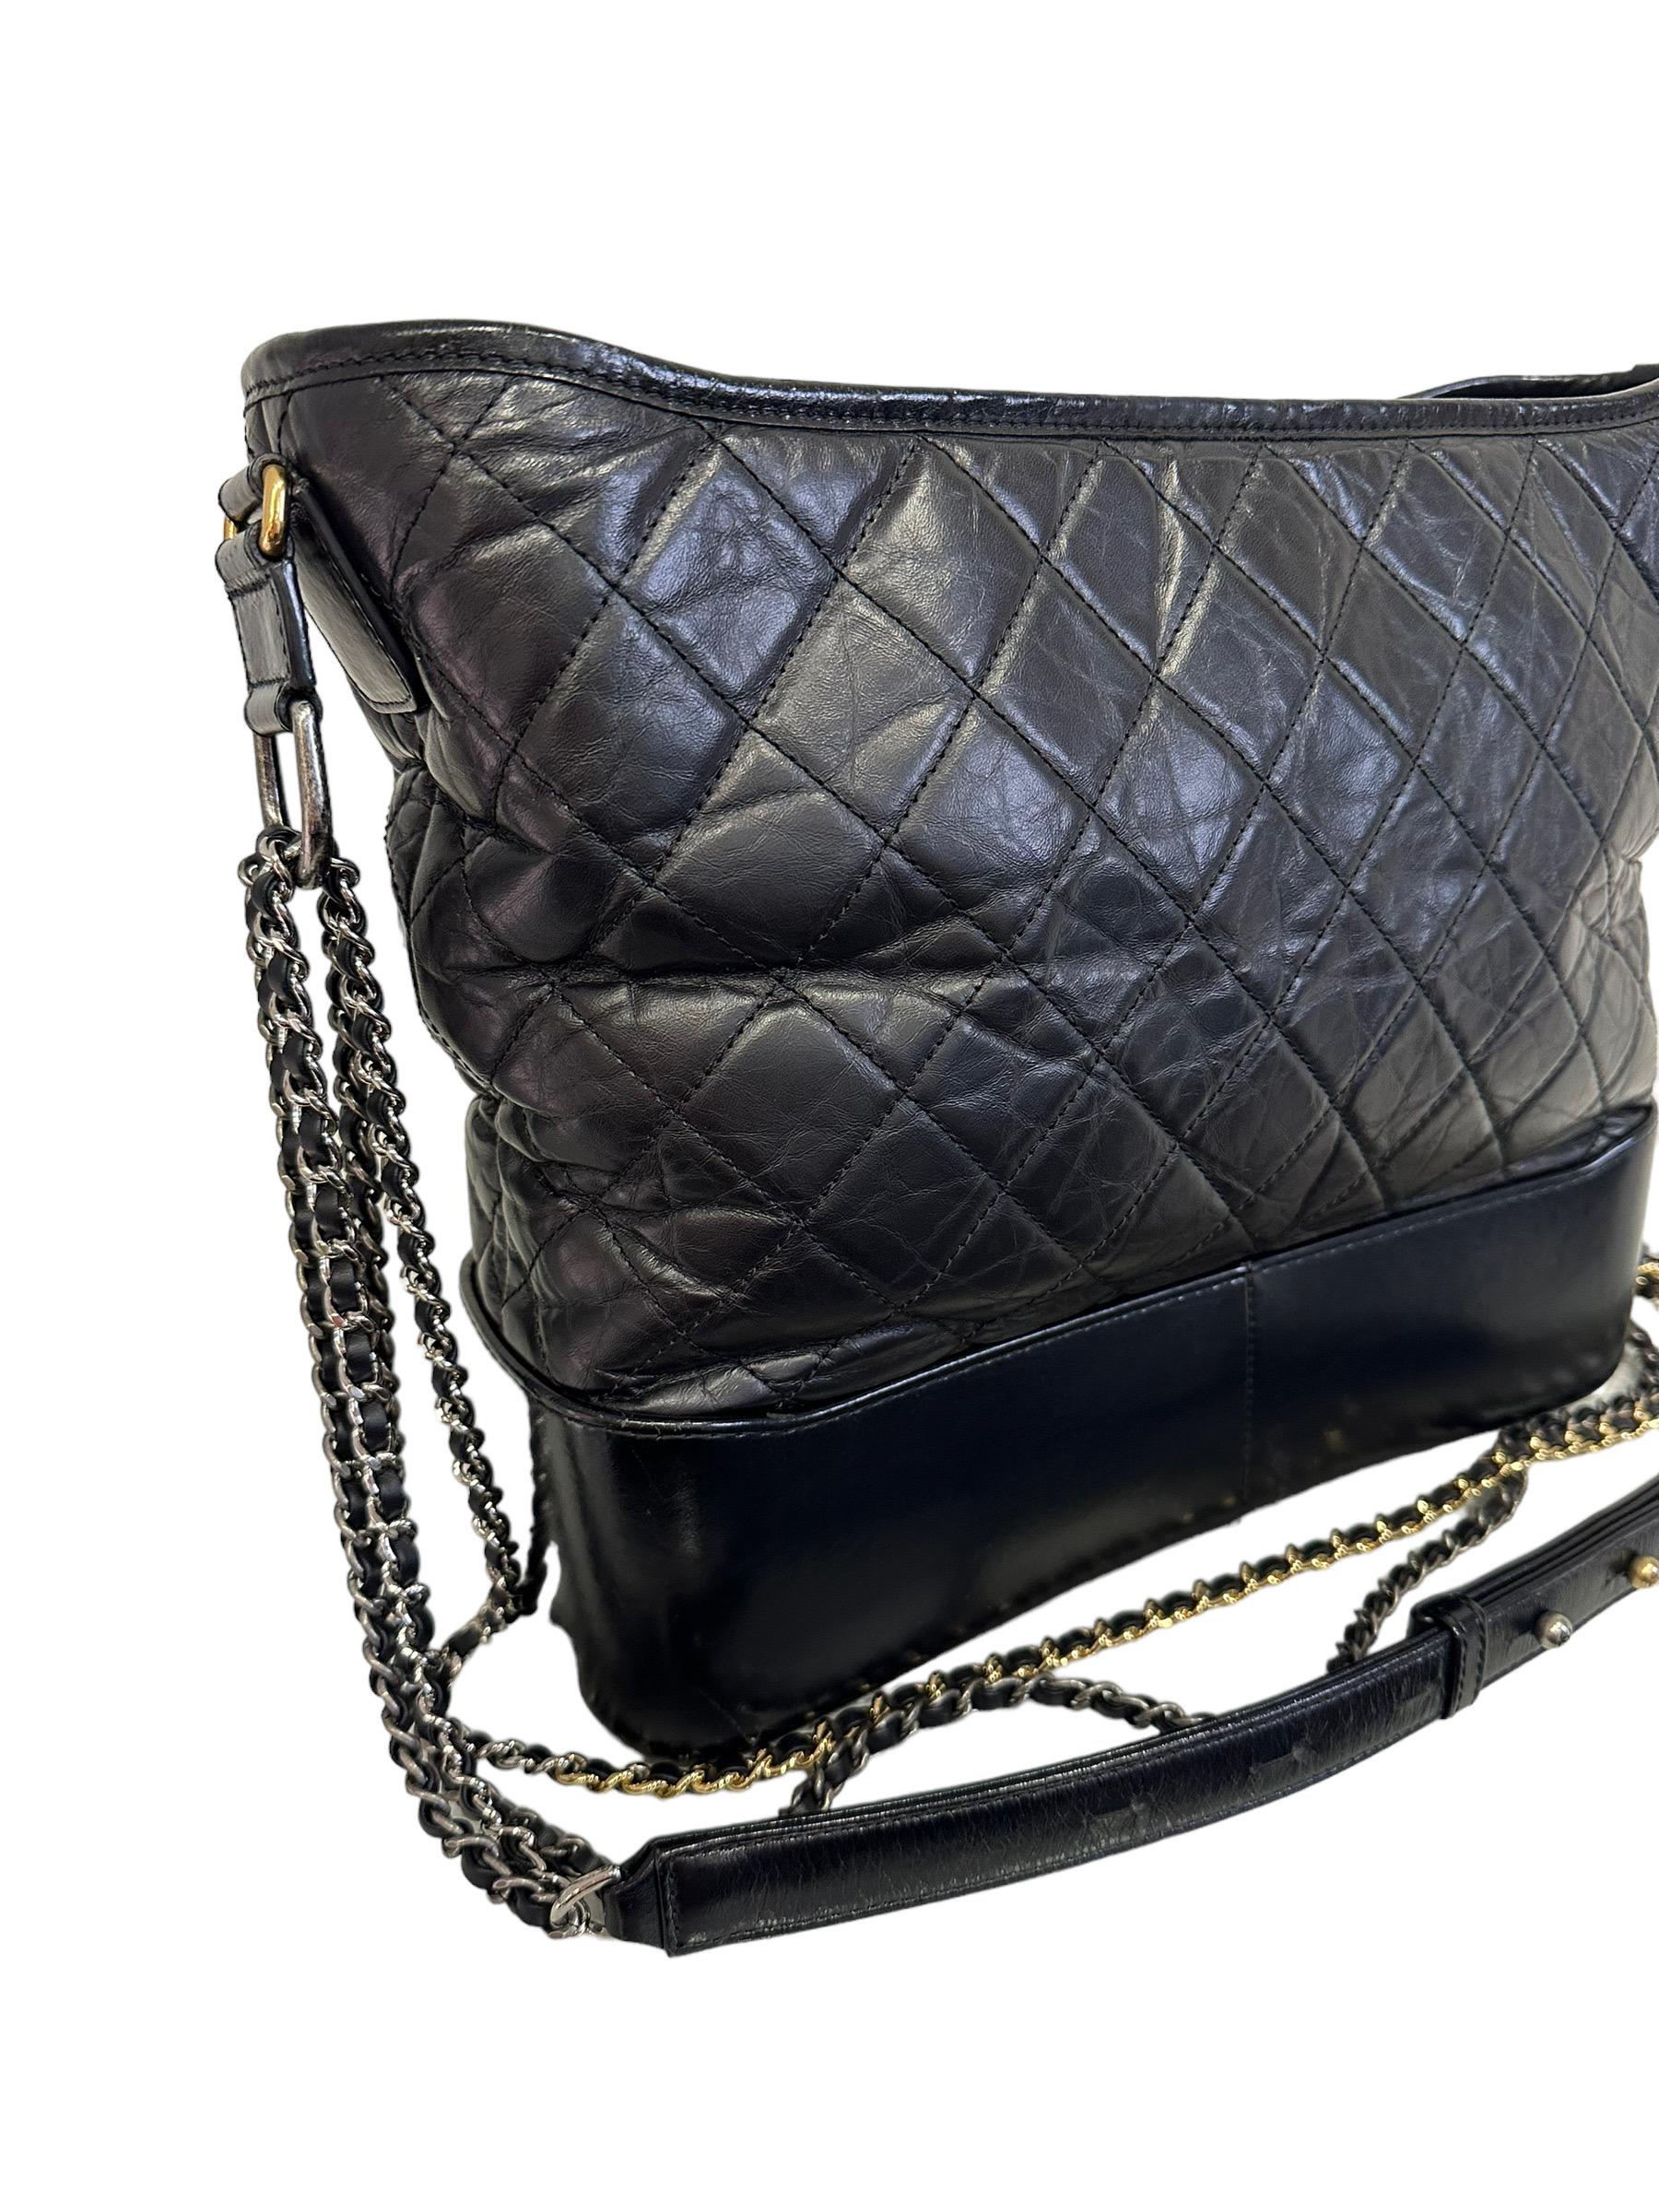 2018 Chanel Gabrielle Maxi Black Leather Top Shoulder Bag For Sale 6